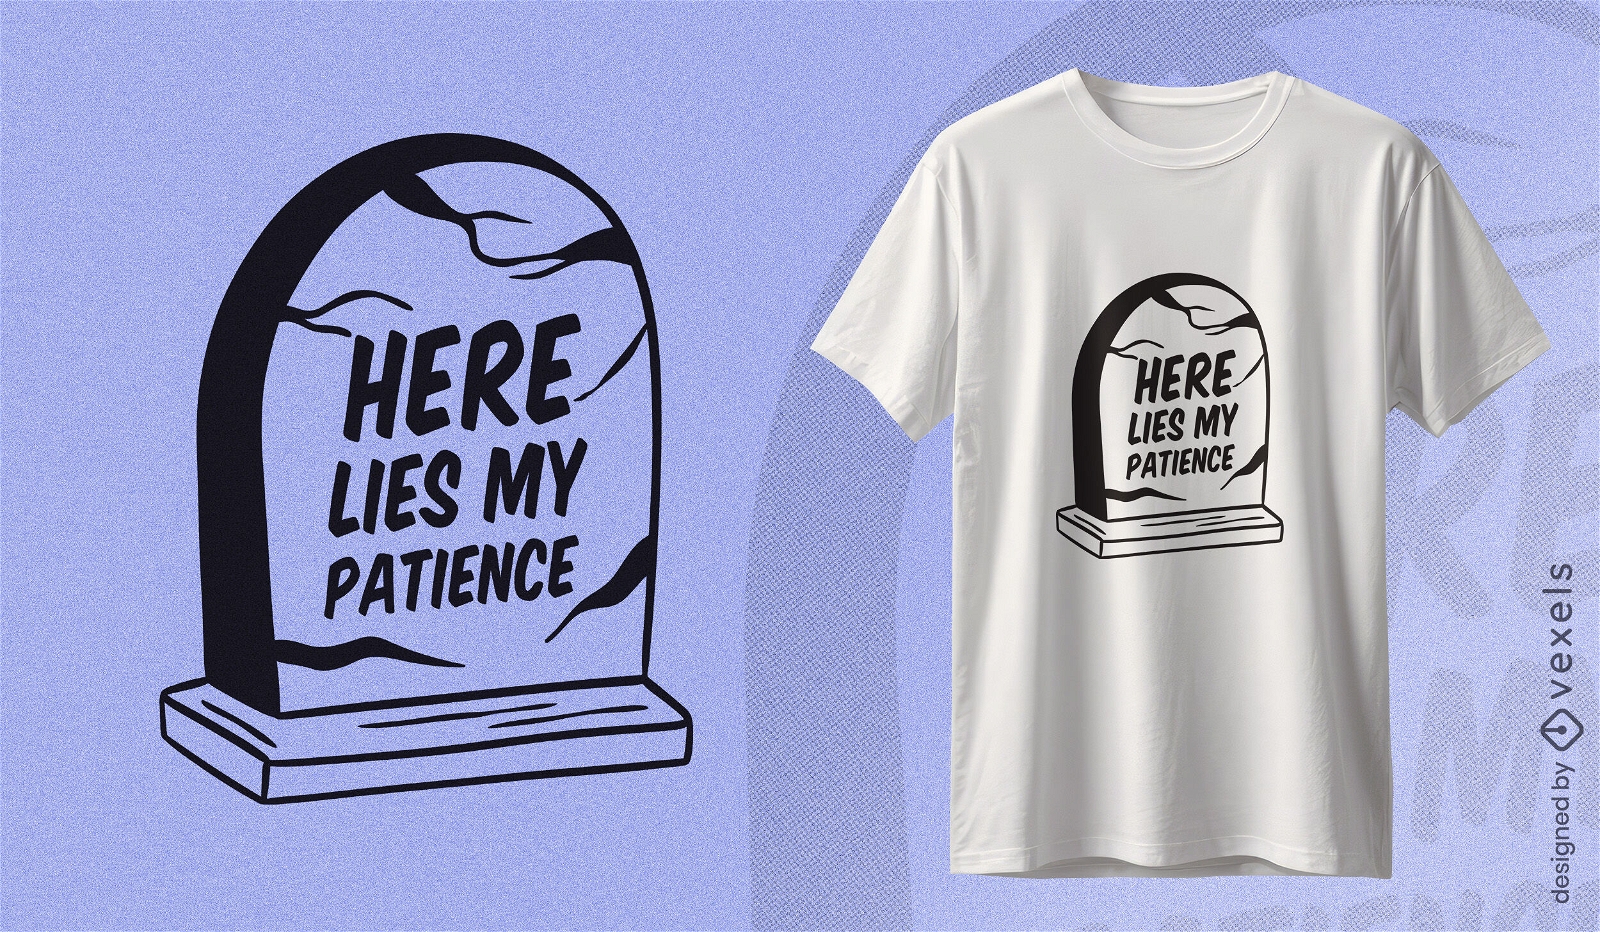 Patience tombstone t-shirt design